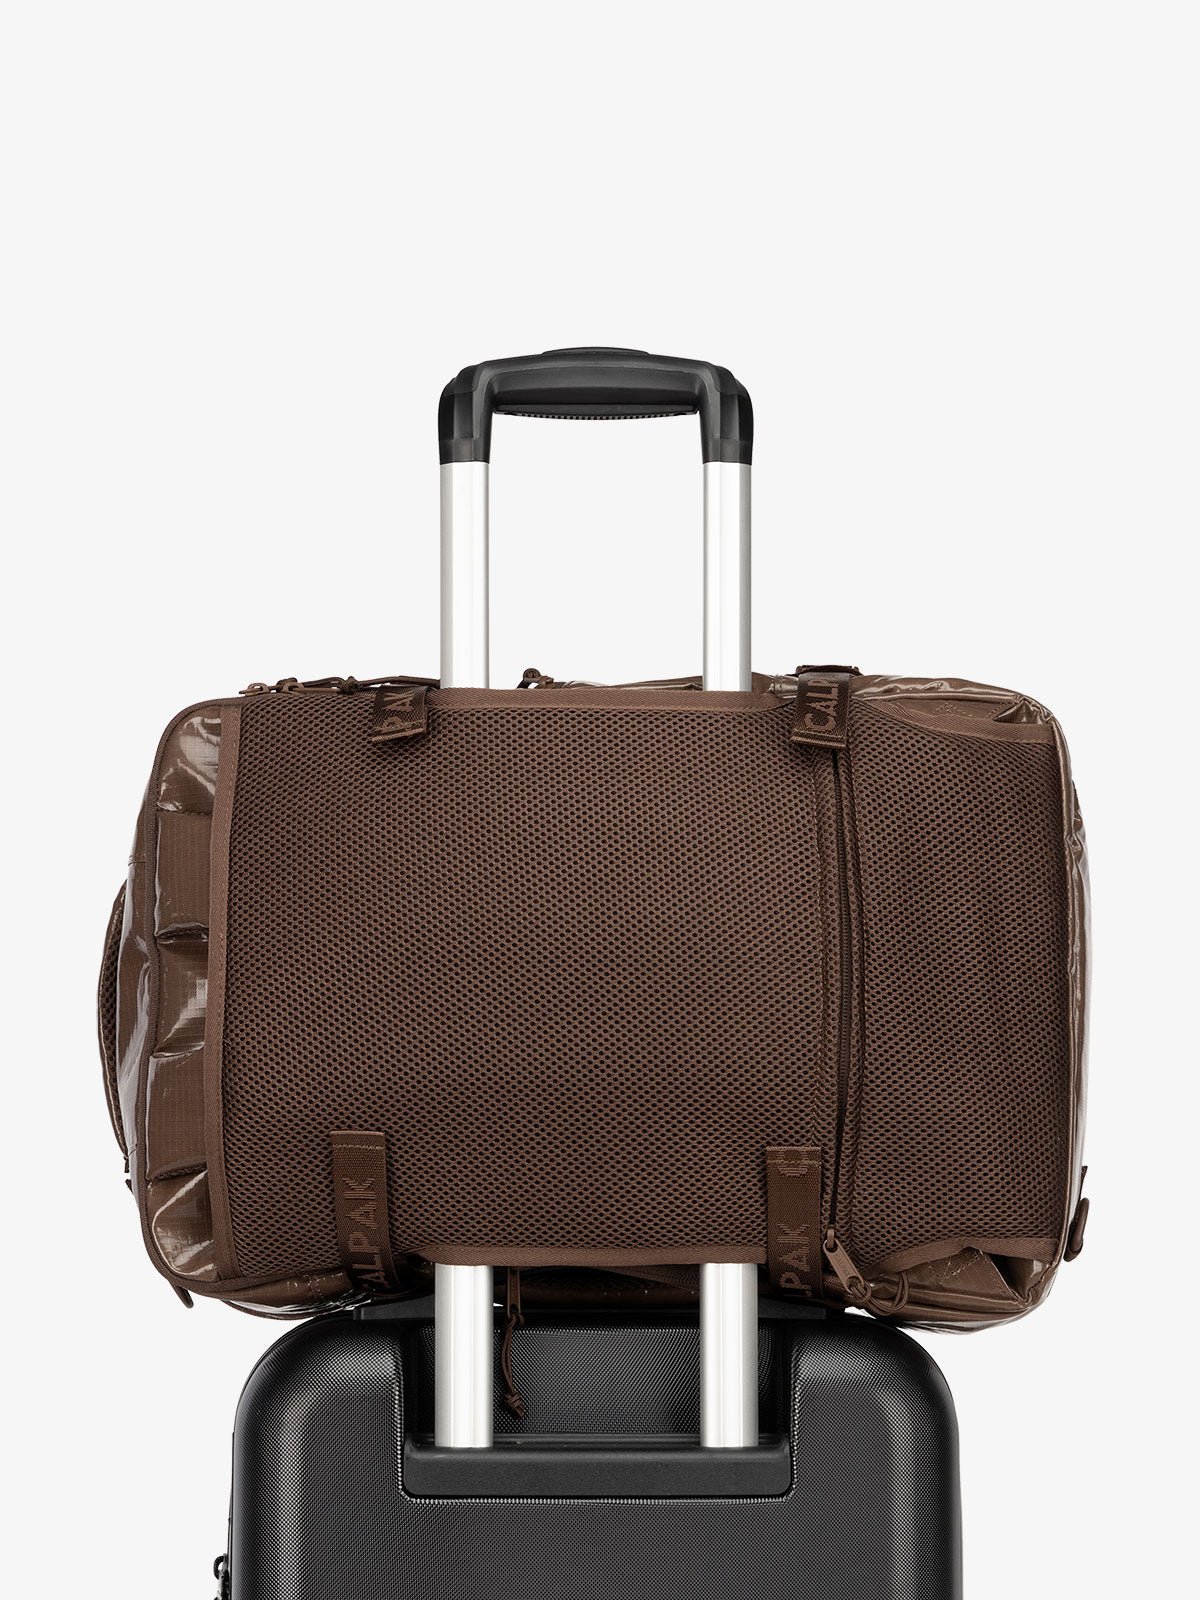 CALPAK Terra 26L Laptop Backpack Duffel with luggage trolley sleeve in cacao brown